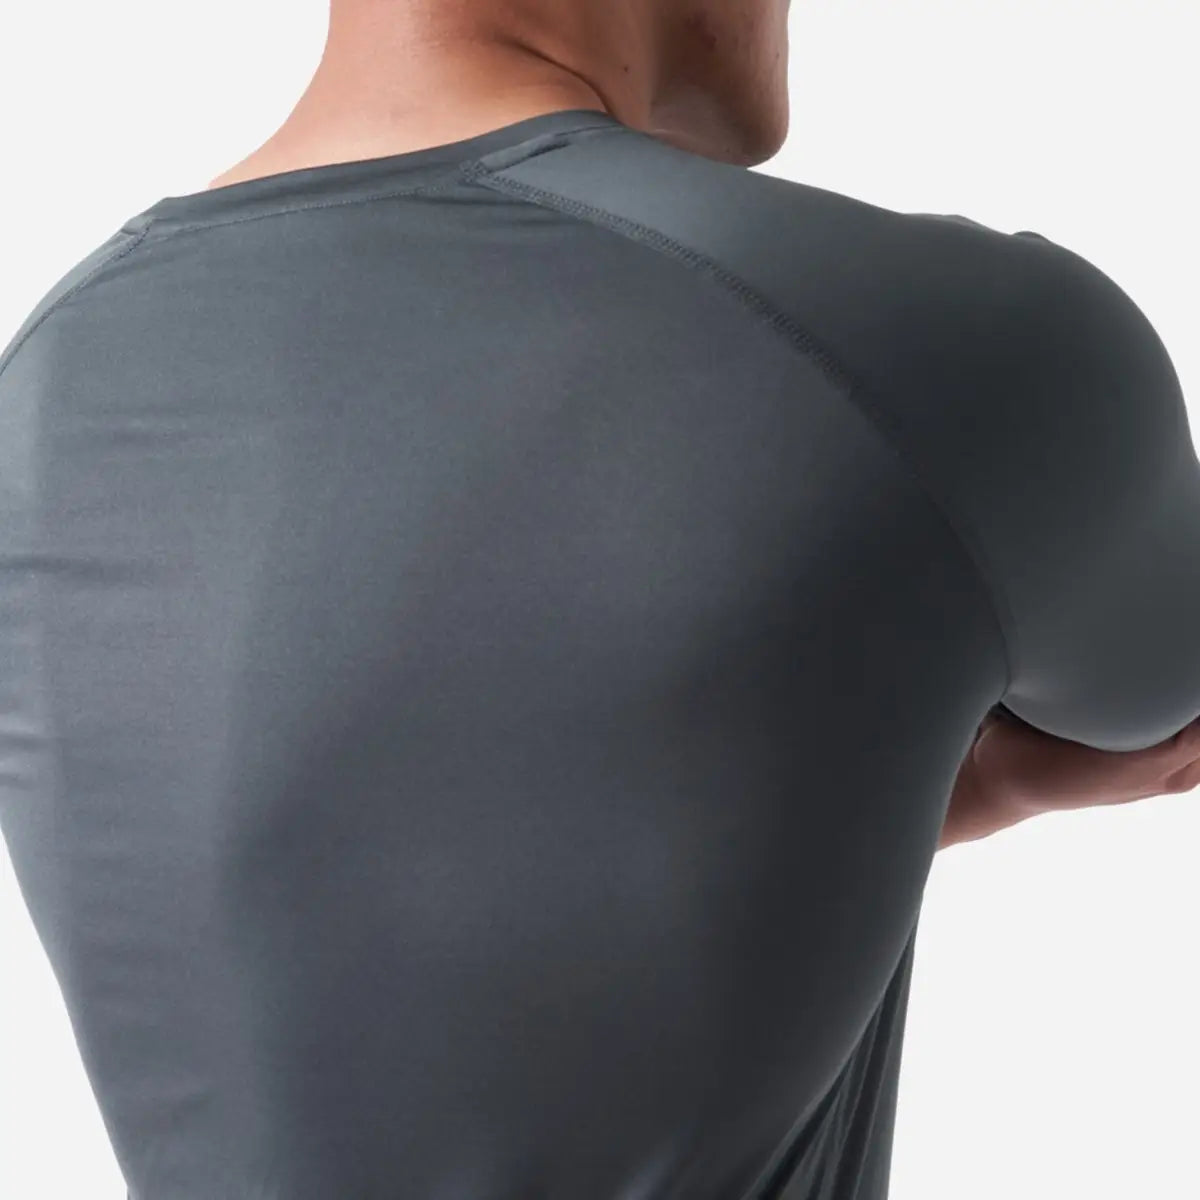 TM Men Workout Long Sleeve T-Shirt - Gray